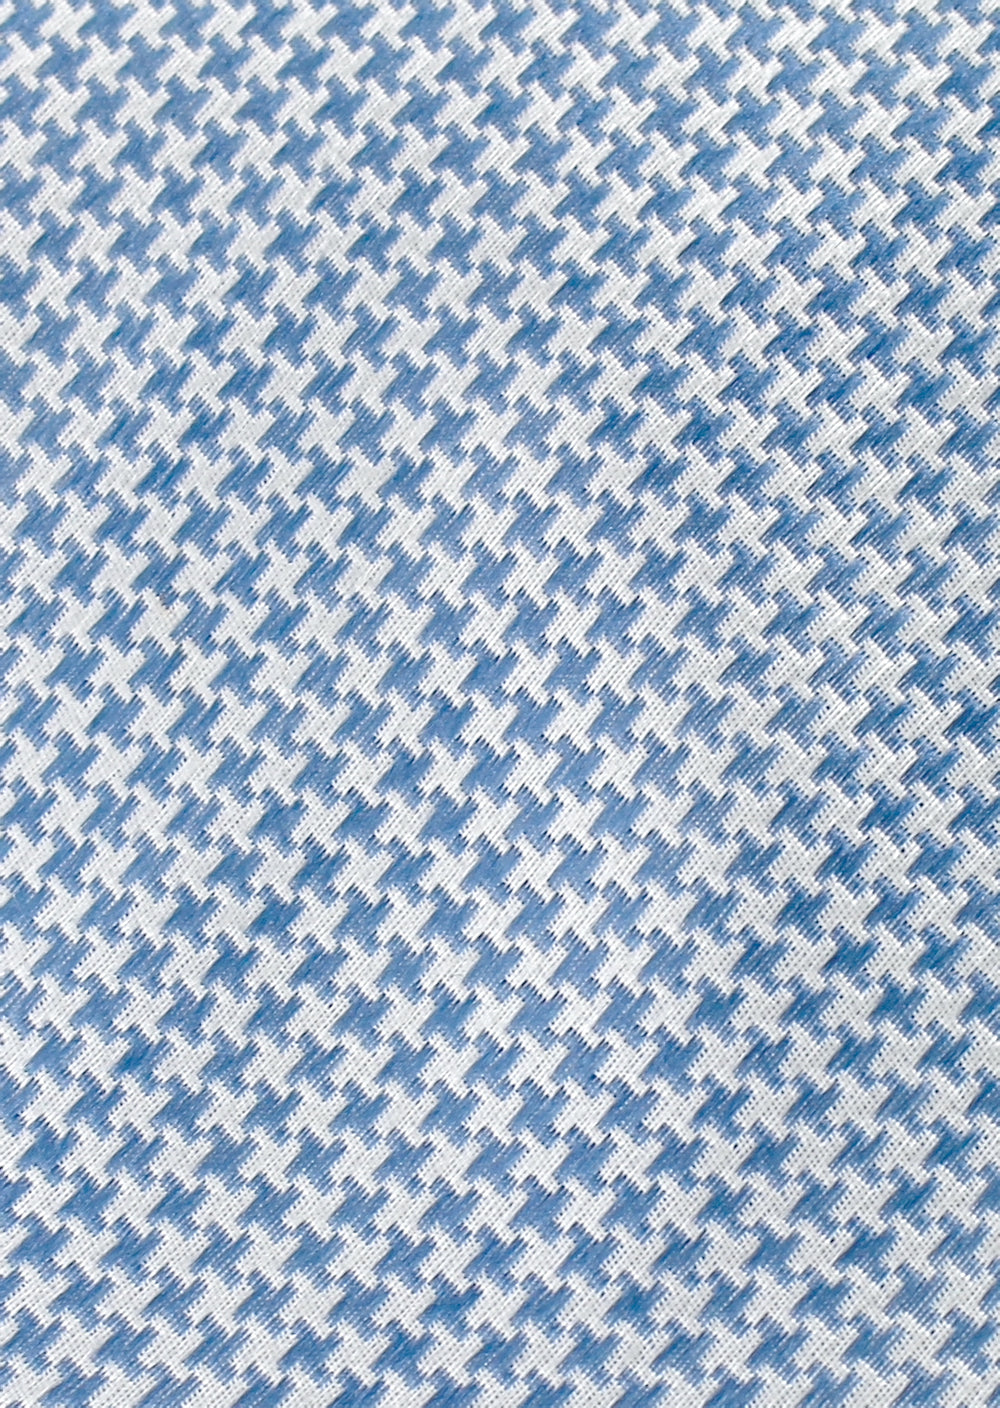 Cravate bleu ciel à motifs blancs